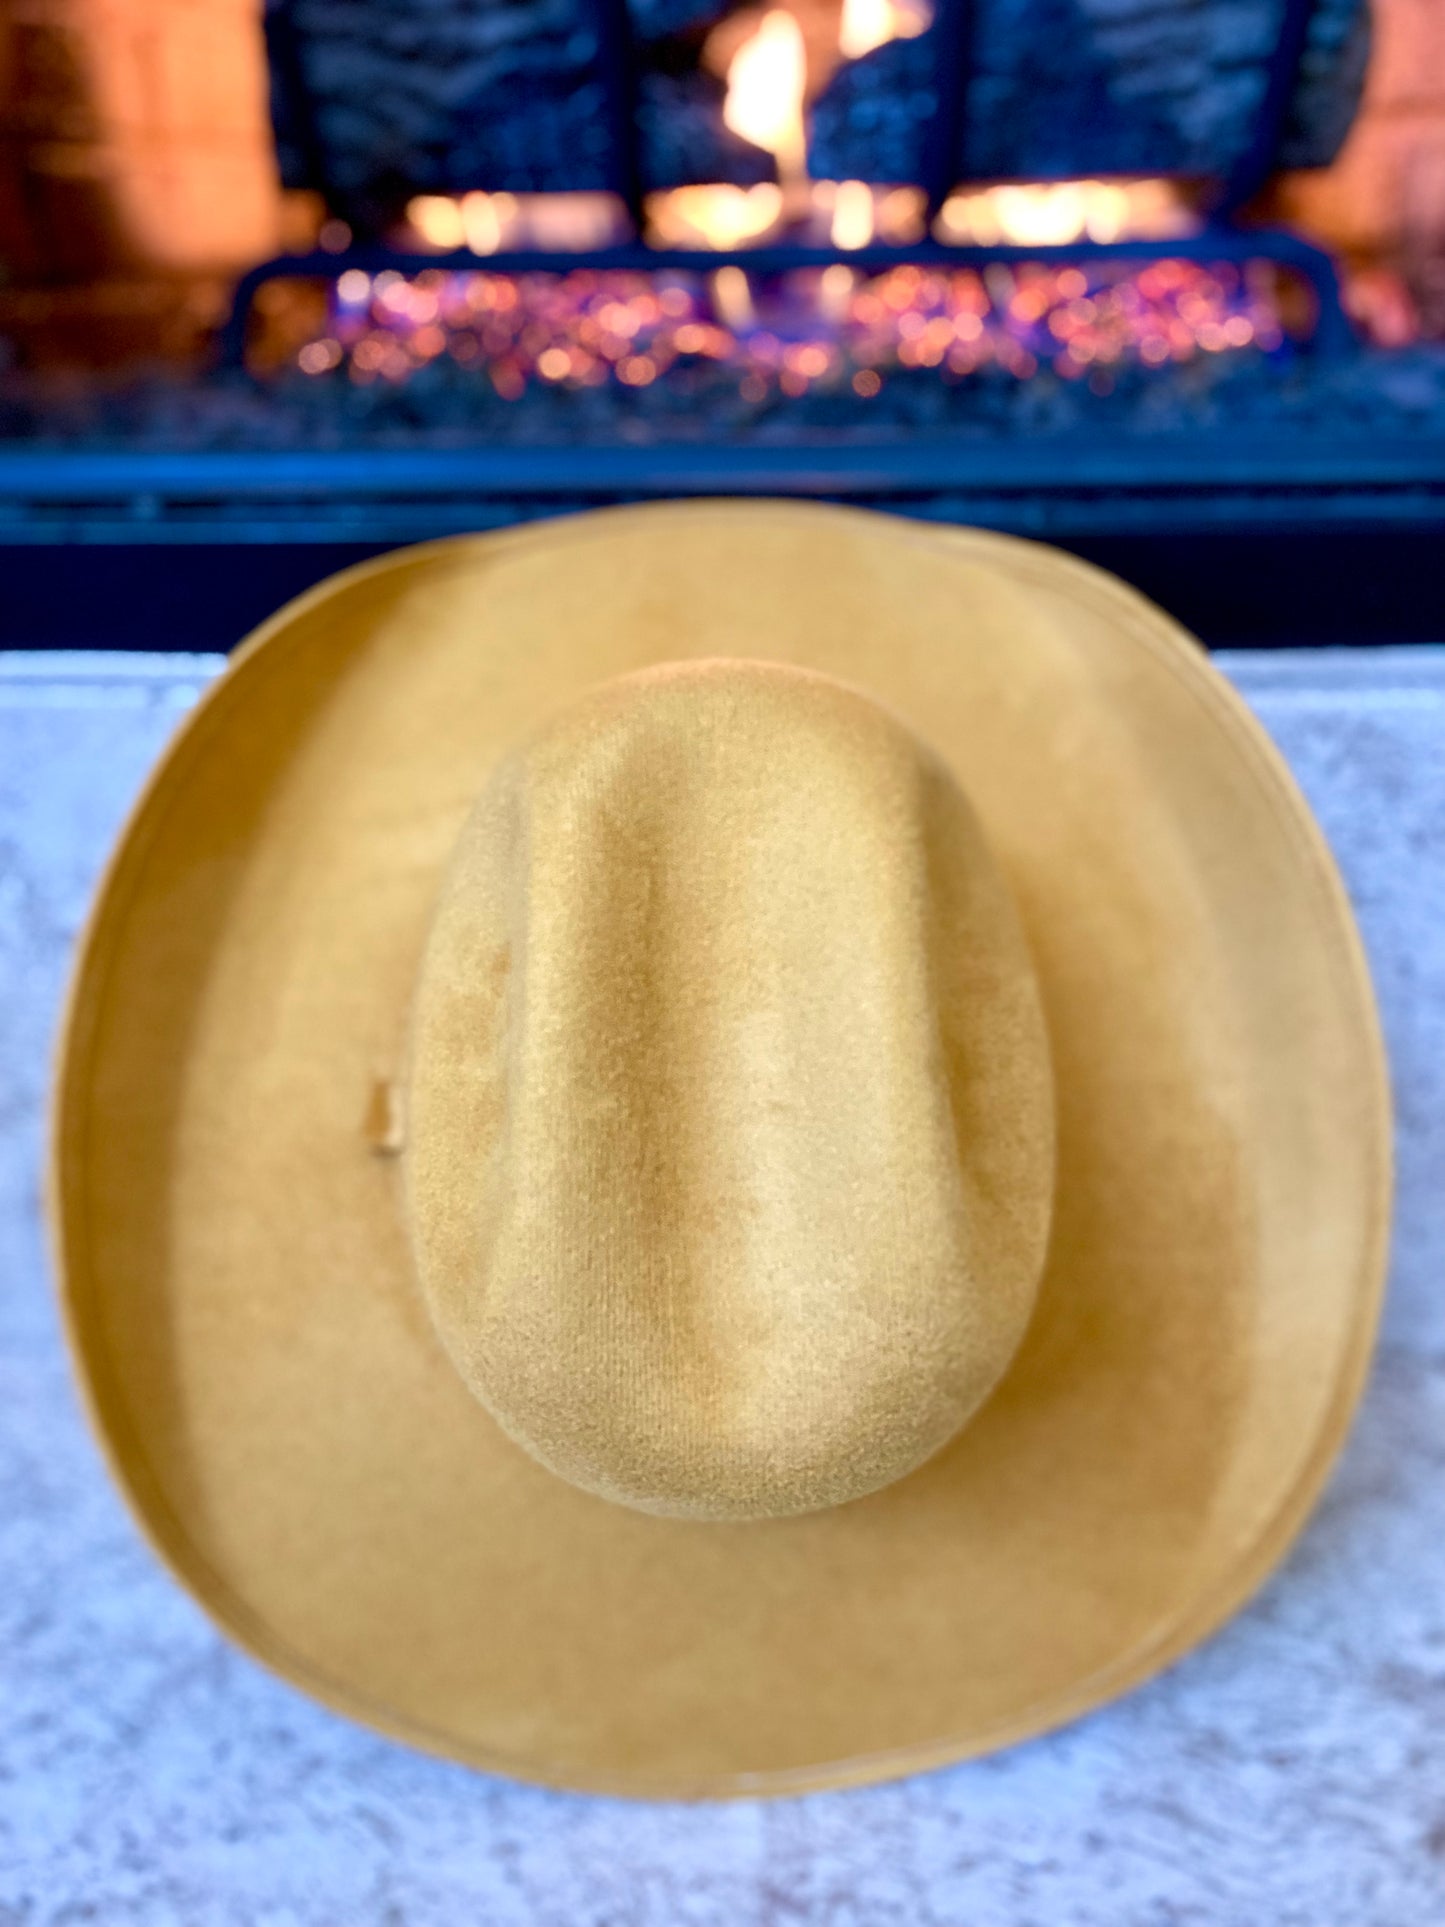 Austin Vegan Suede Cowboy Hat- Mustard w/o Band